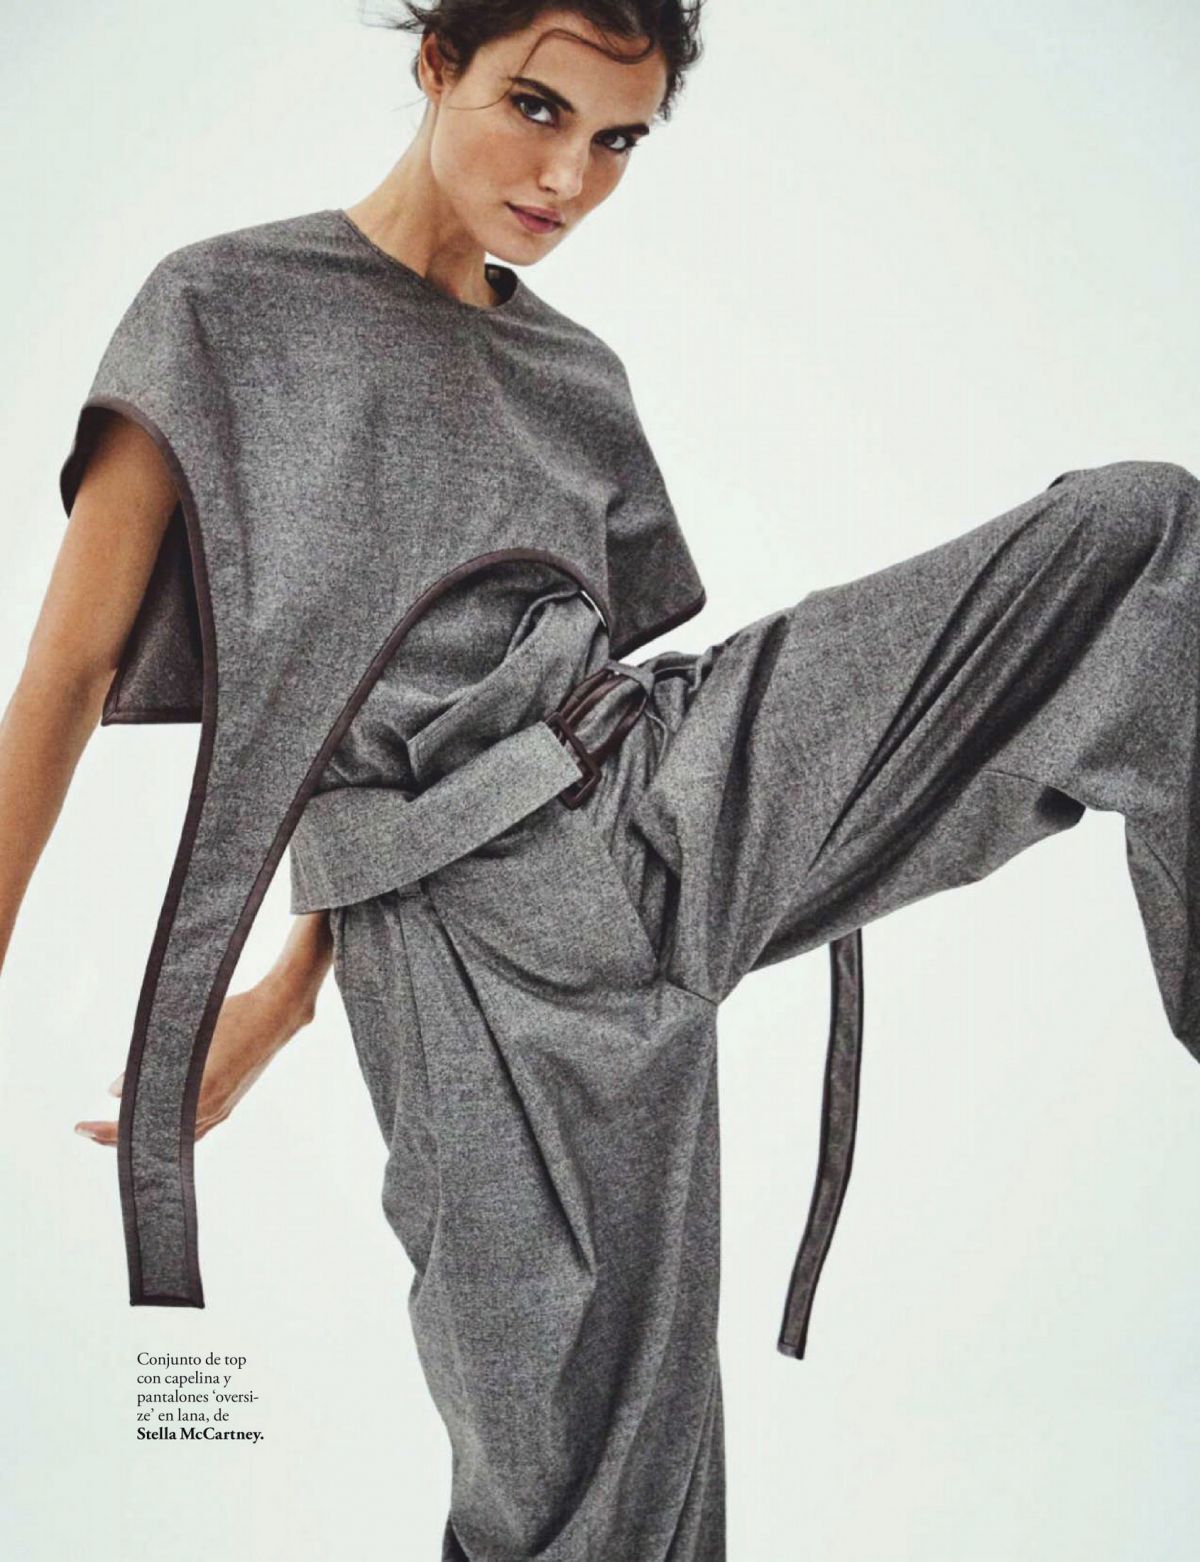 Blanca Padilla in Elle Magazine, Spain October 2020 Issue 11